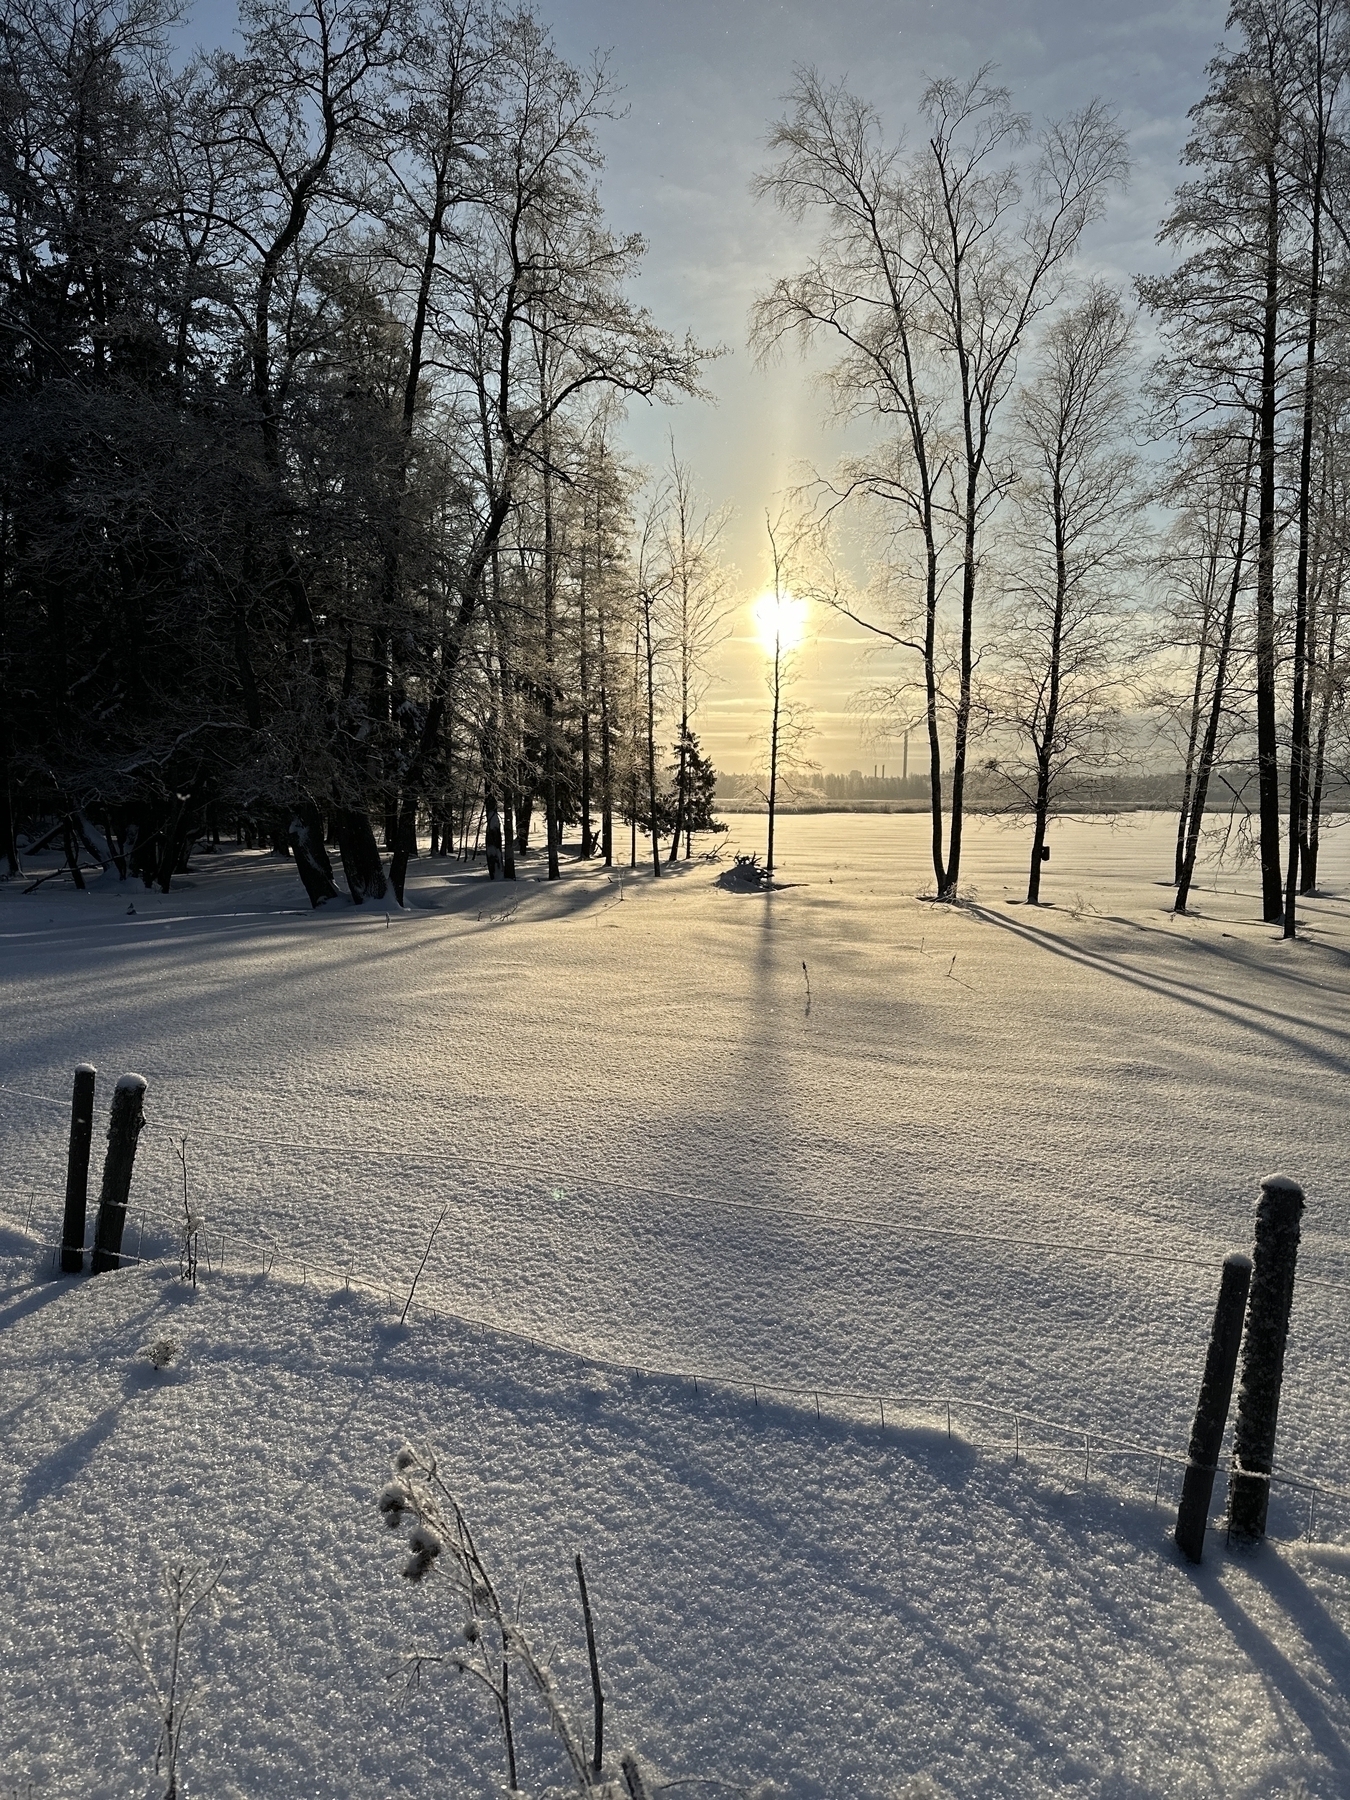 Snow, fence, trees and sun peeking through